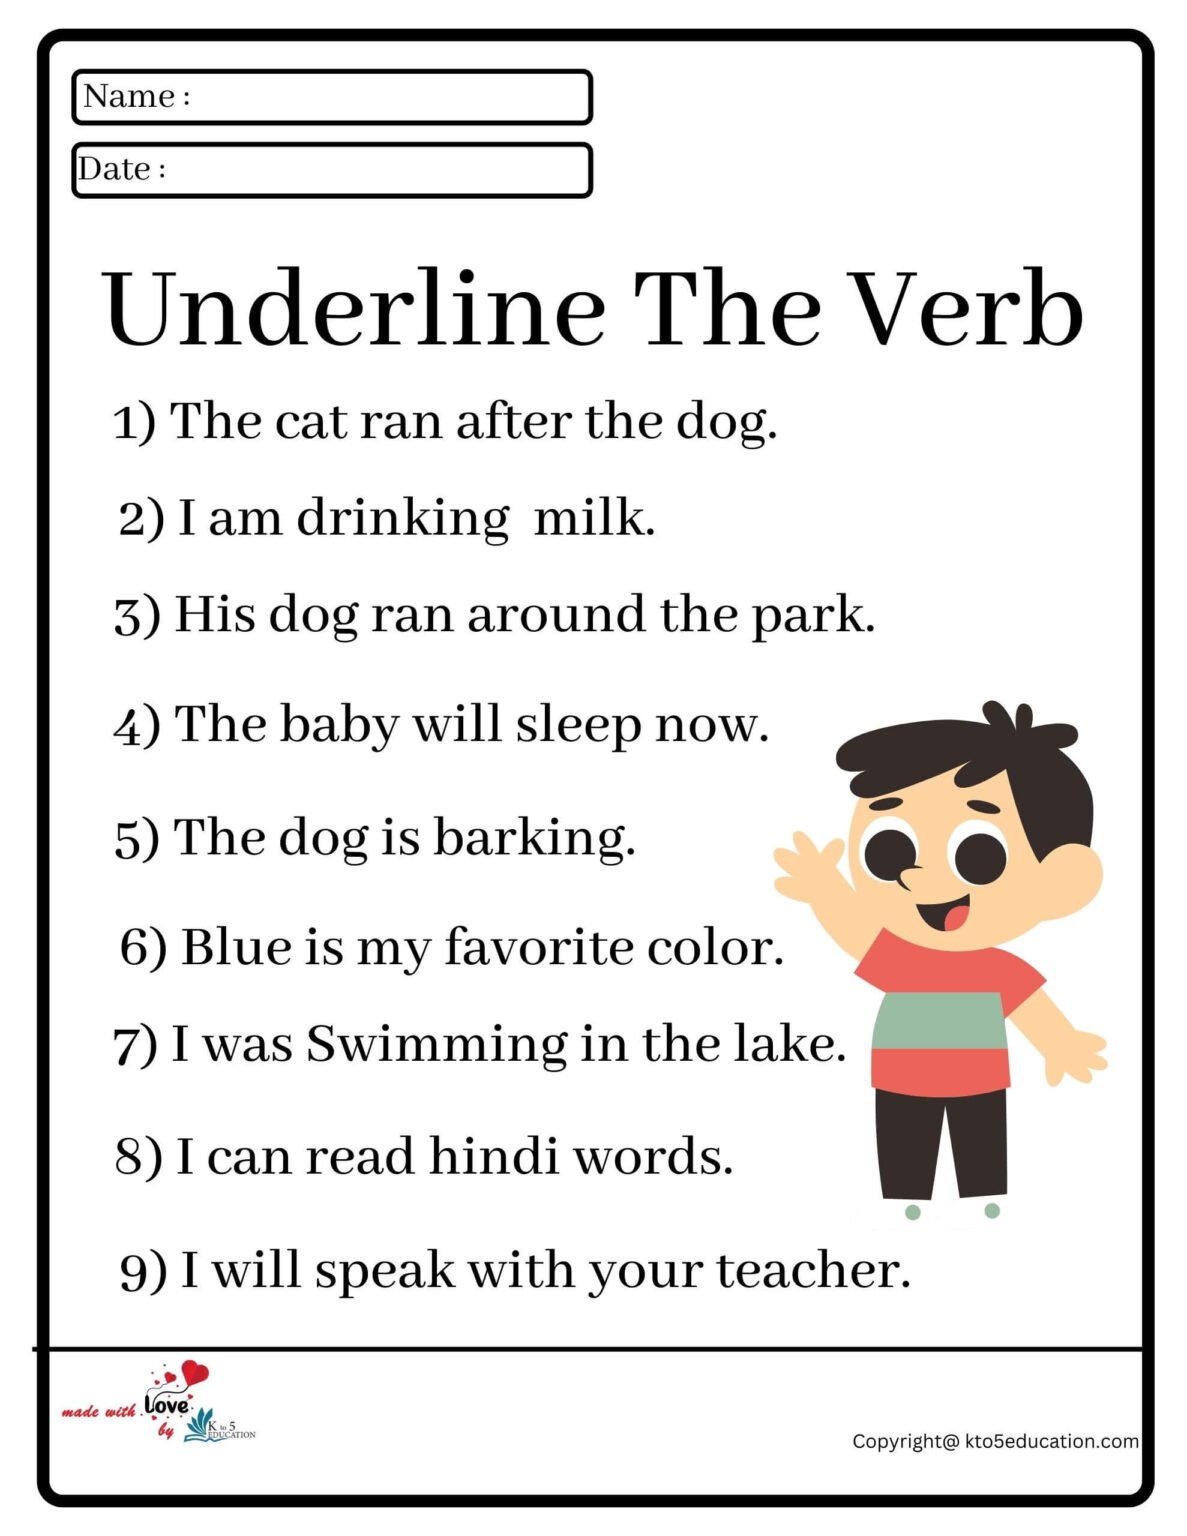 underline-the-verb-worksheet-2-free-download